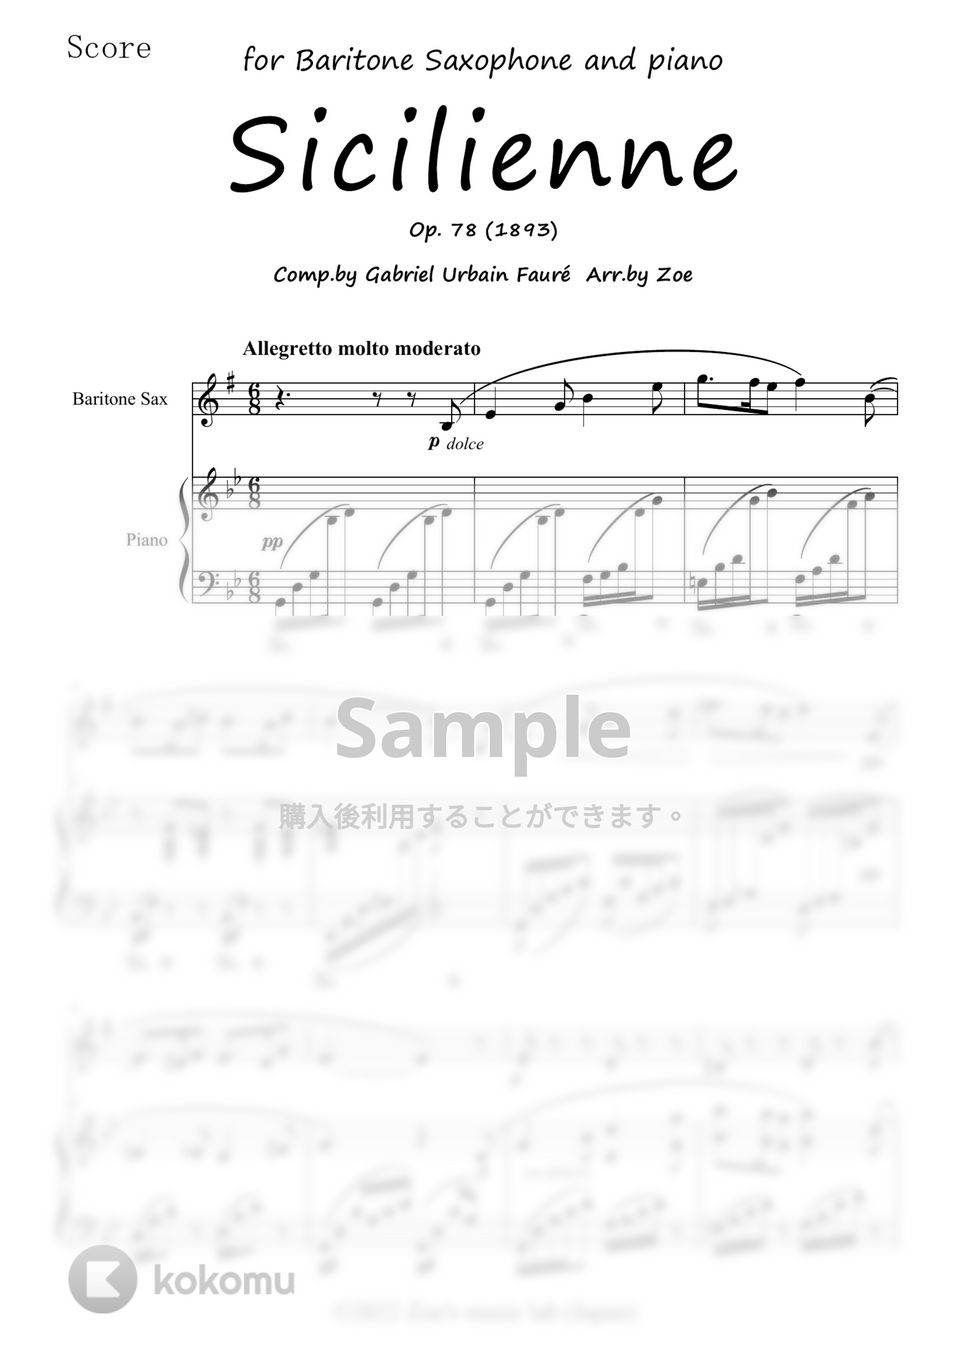 Gabriel Urbain Fauré - シシリエンヌ ( シチリアーノ ) for Baritone Sax and Piano (バリトンサックス/ピアノ/フォーレ/) by Zoe